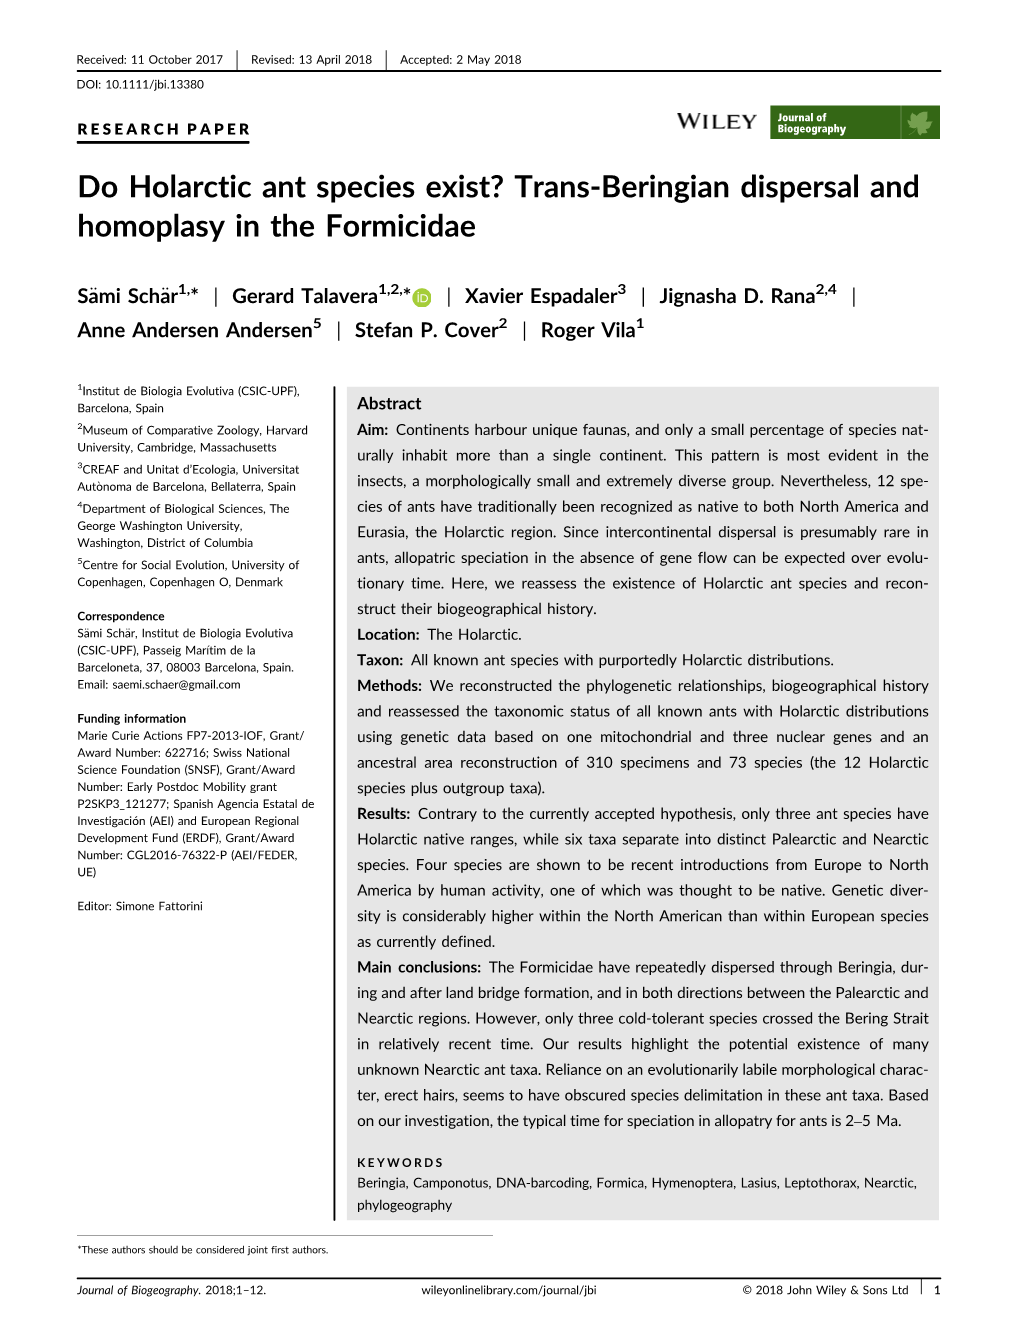 Do Holarctic Ant Species Exist? Trans&#X2010;Beringian